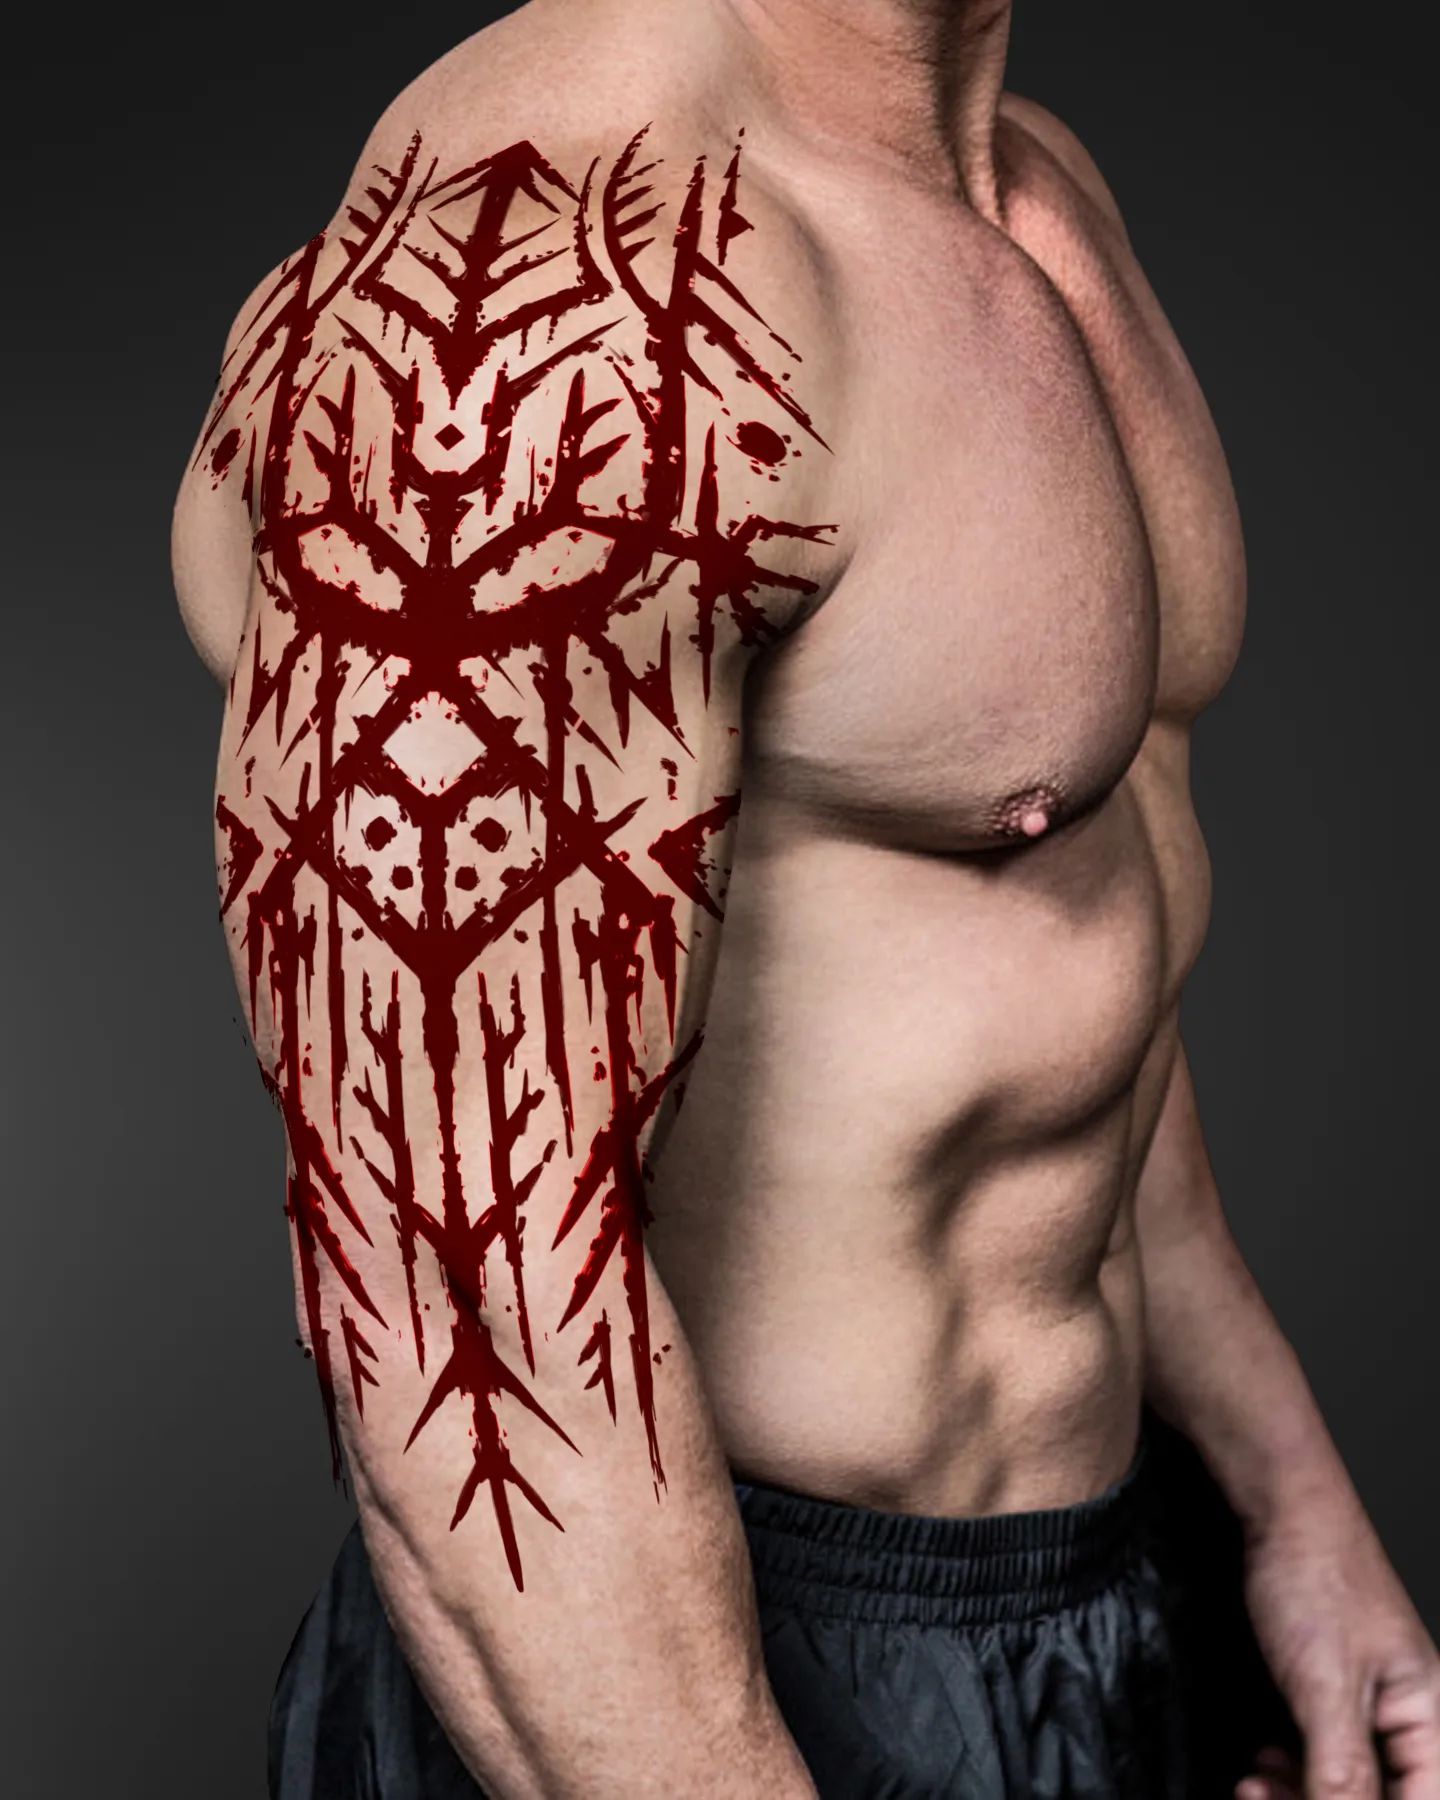 30+ Classy Shoulder Tattoo Designs & Ideas For Men - 100 Tattoos